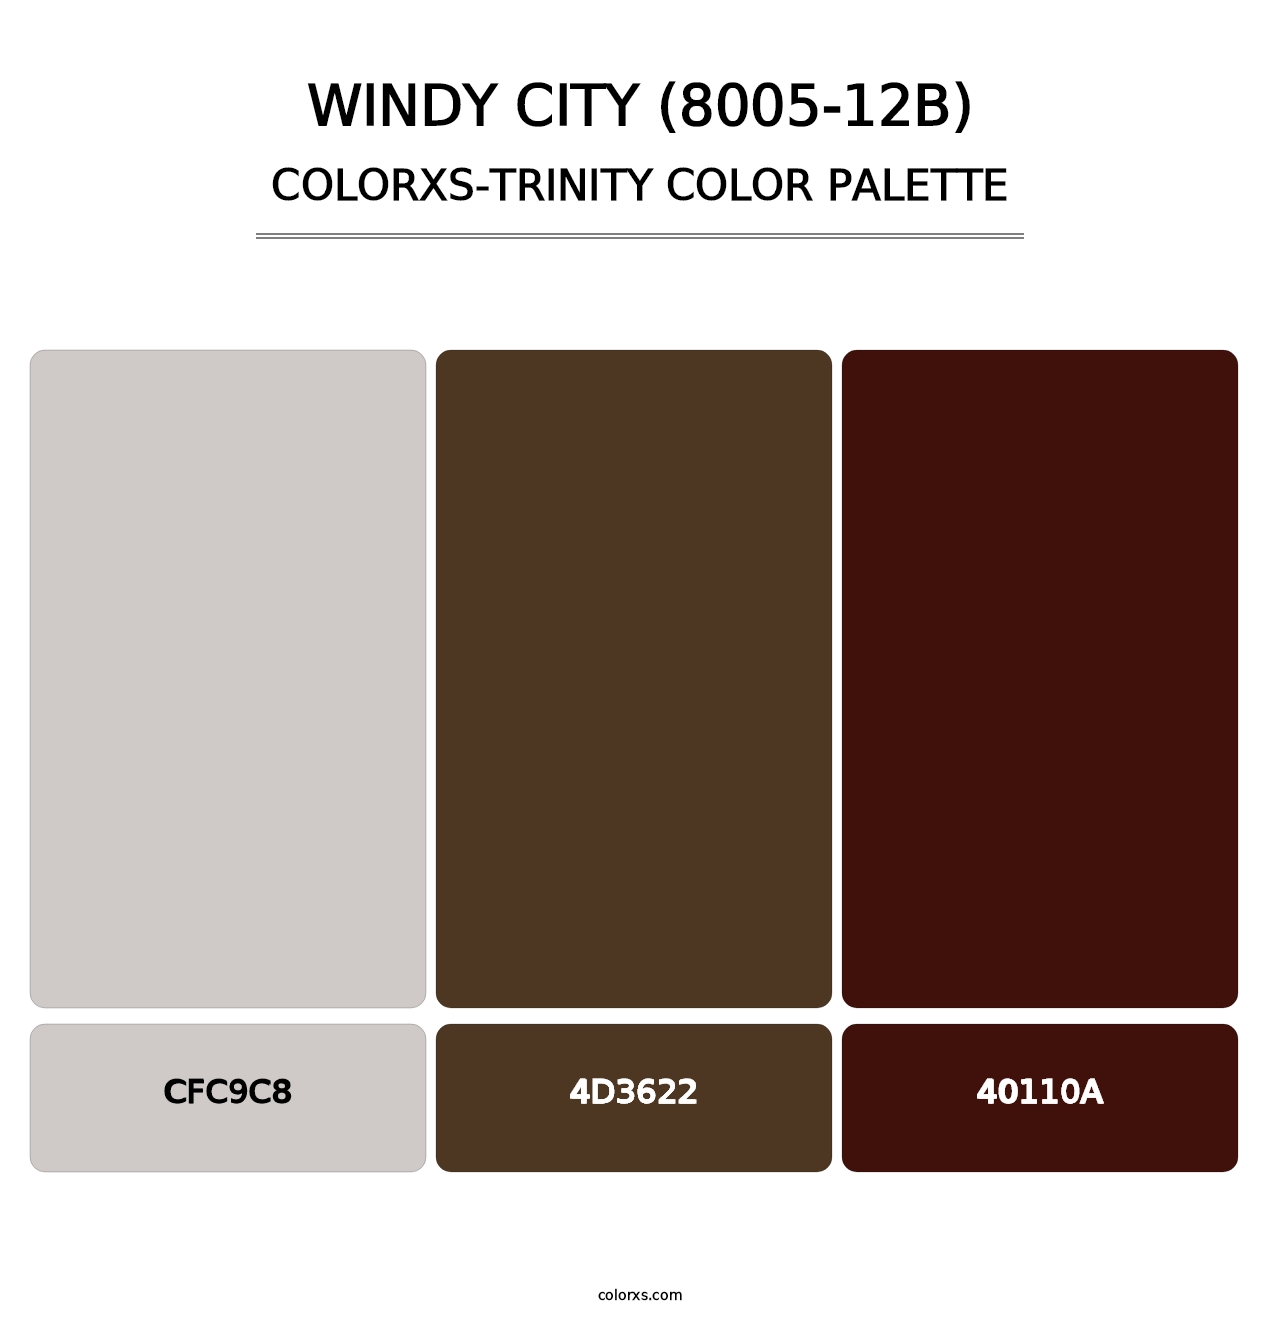 Windy City (8005-12B) - Colorxs Trinity Palette